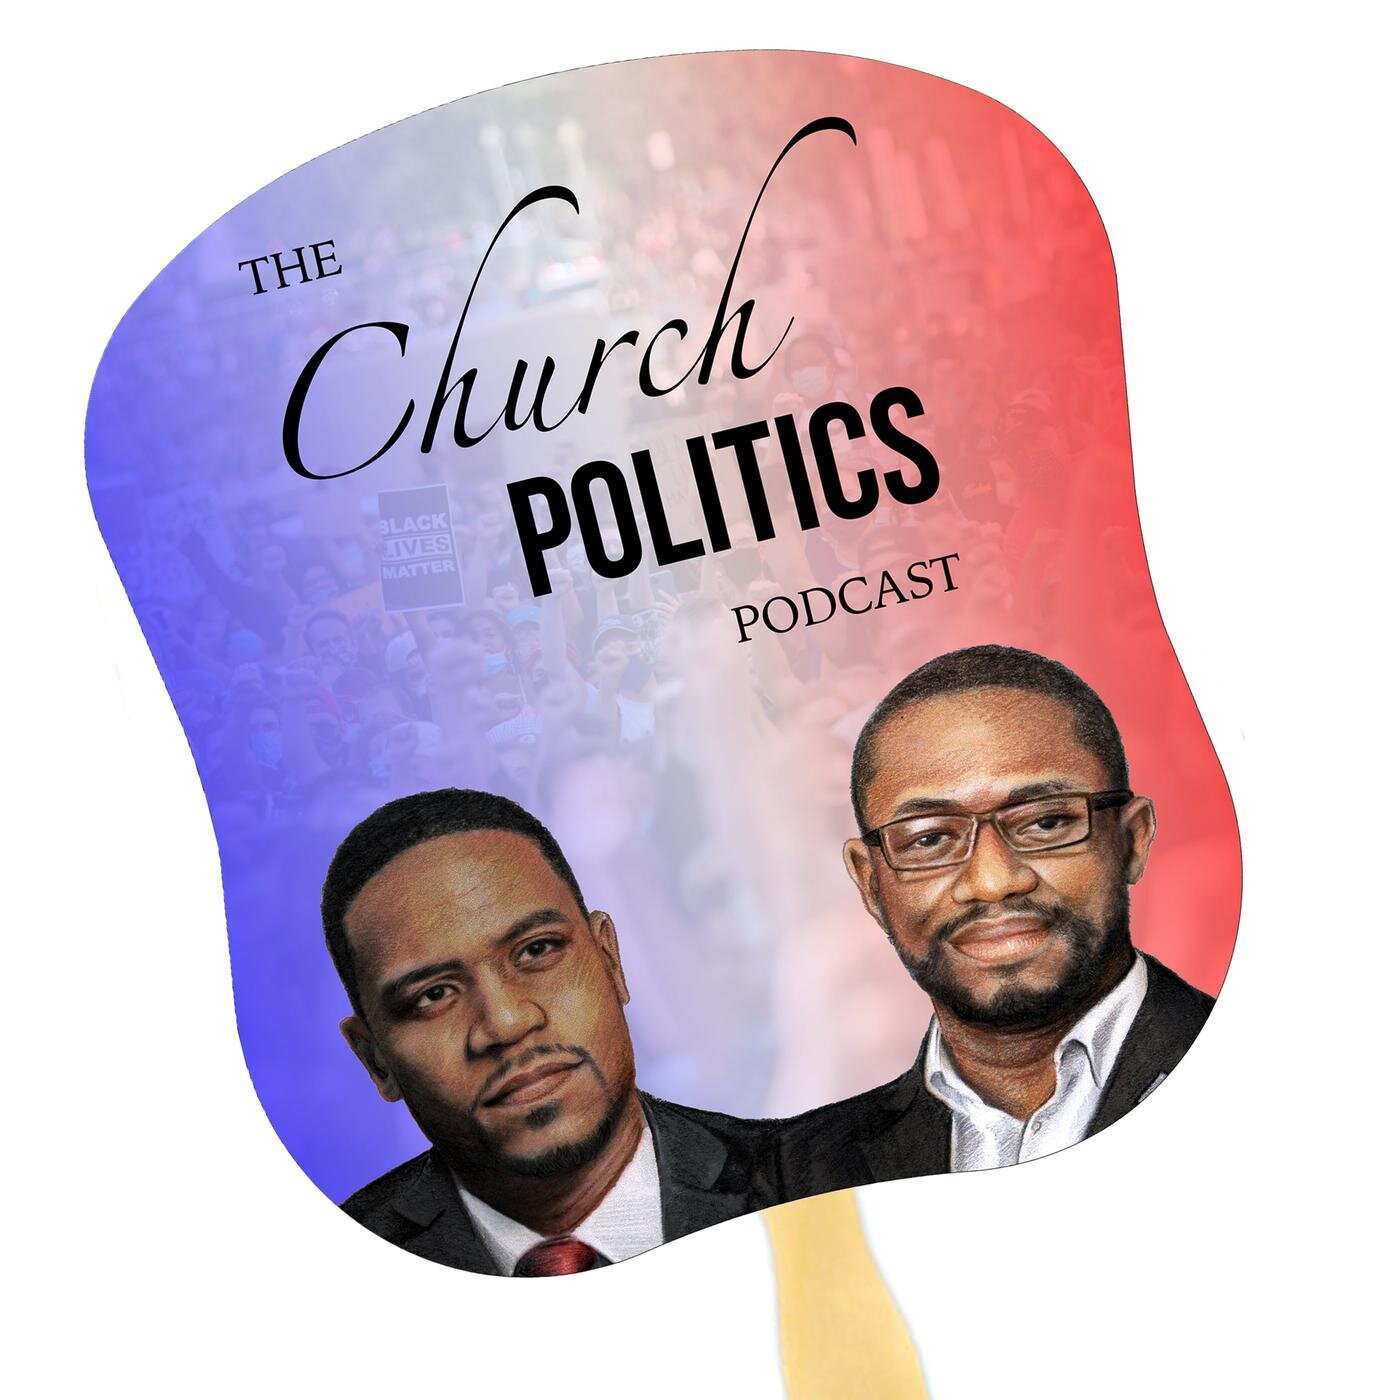 the-church-politics-podcast-and-campaign-qlXjIOore8C-9Jo_O-XxKVN.1400x1400.jpg